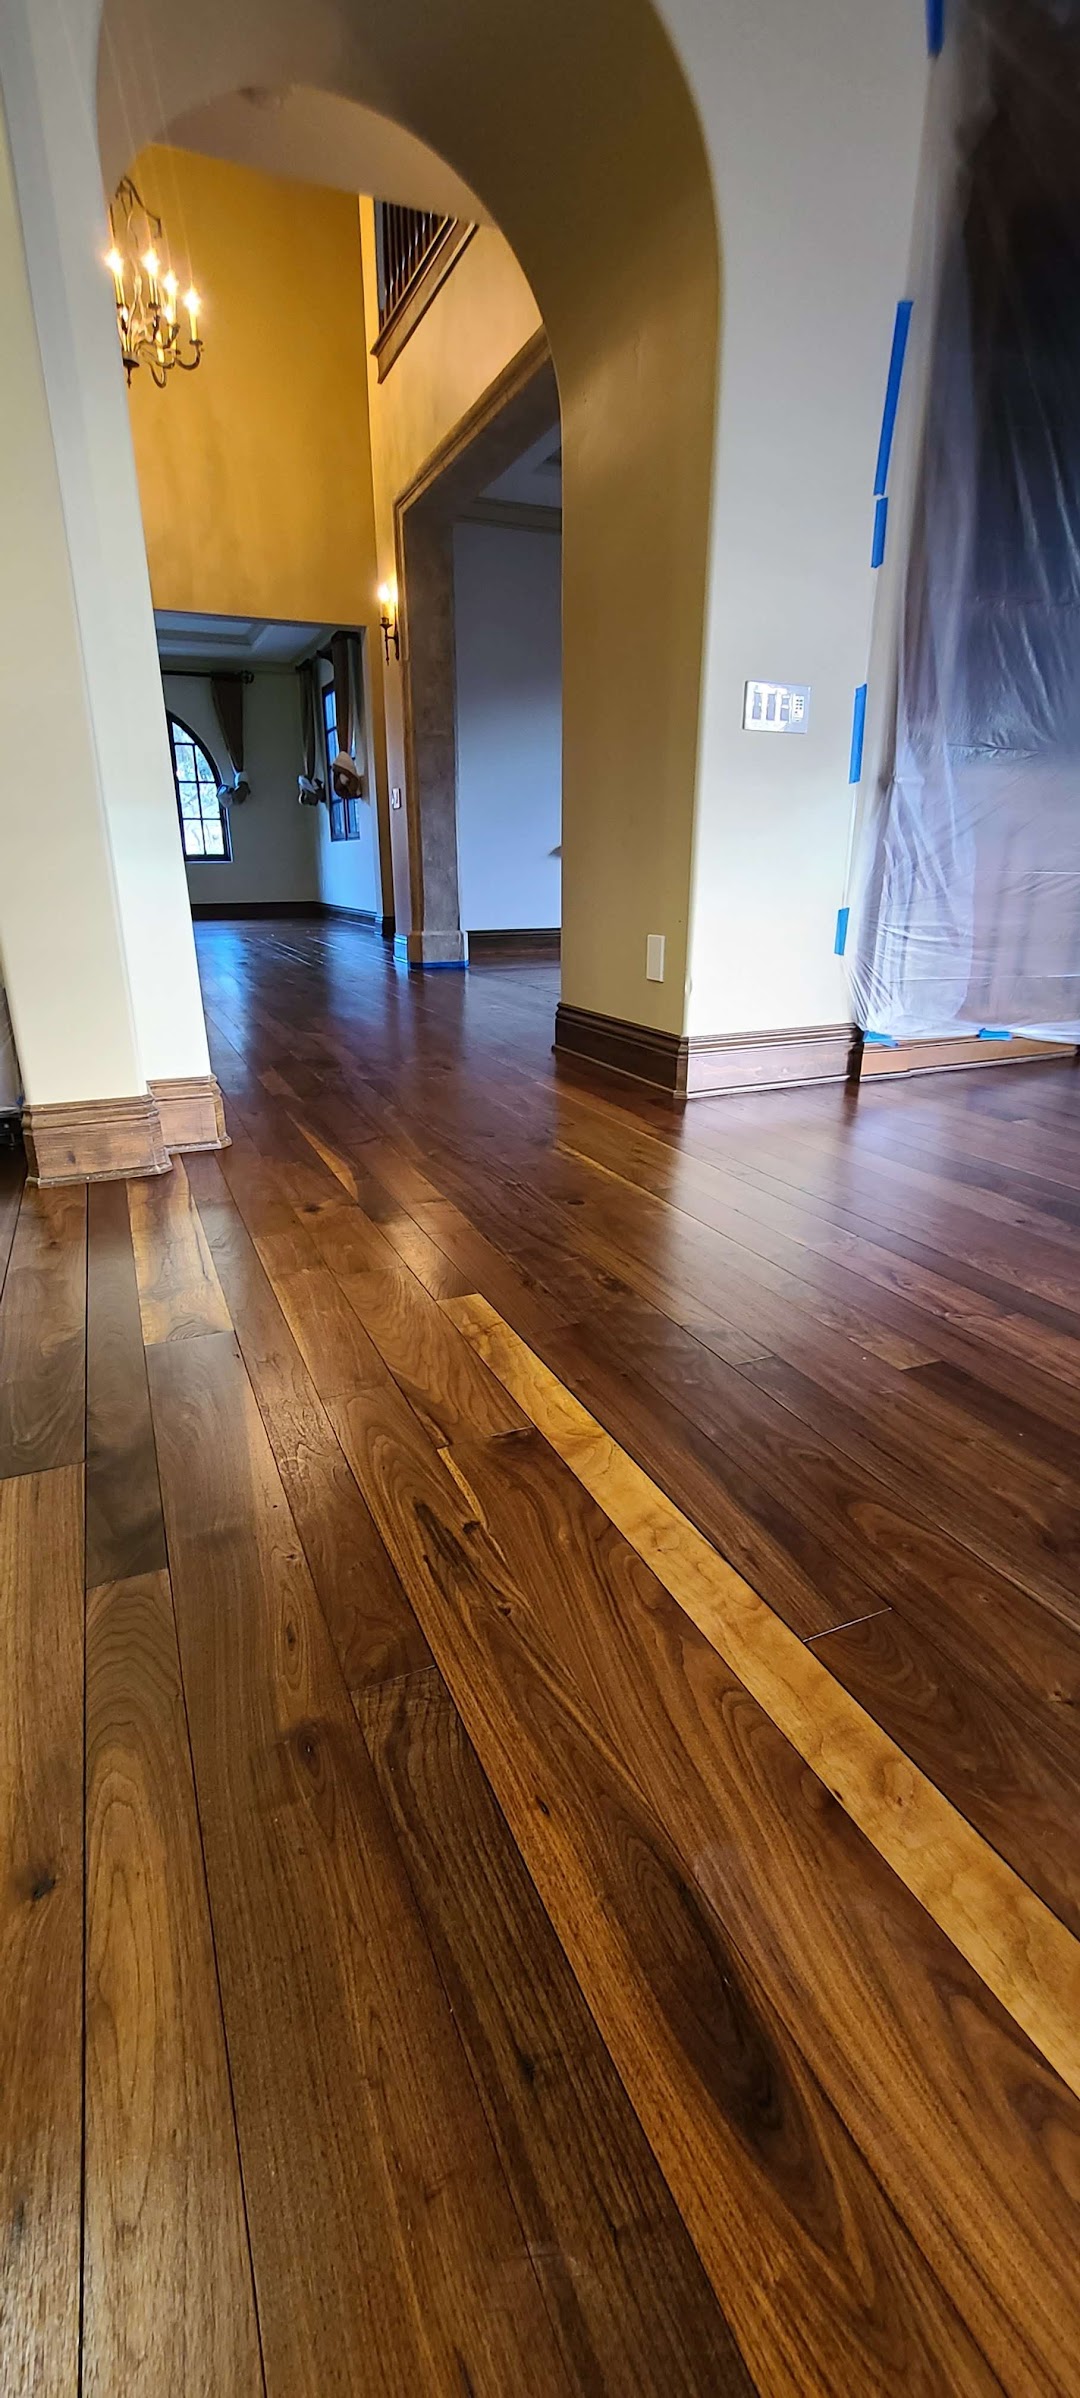 Affordable Hardwood Floors In The City, Hardwood Floor Refinishing Santa Barbara